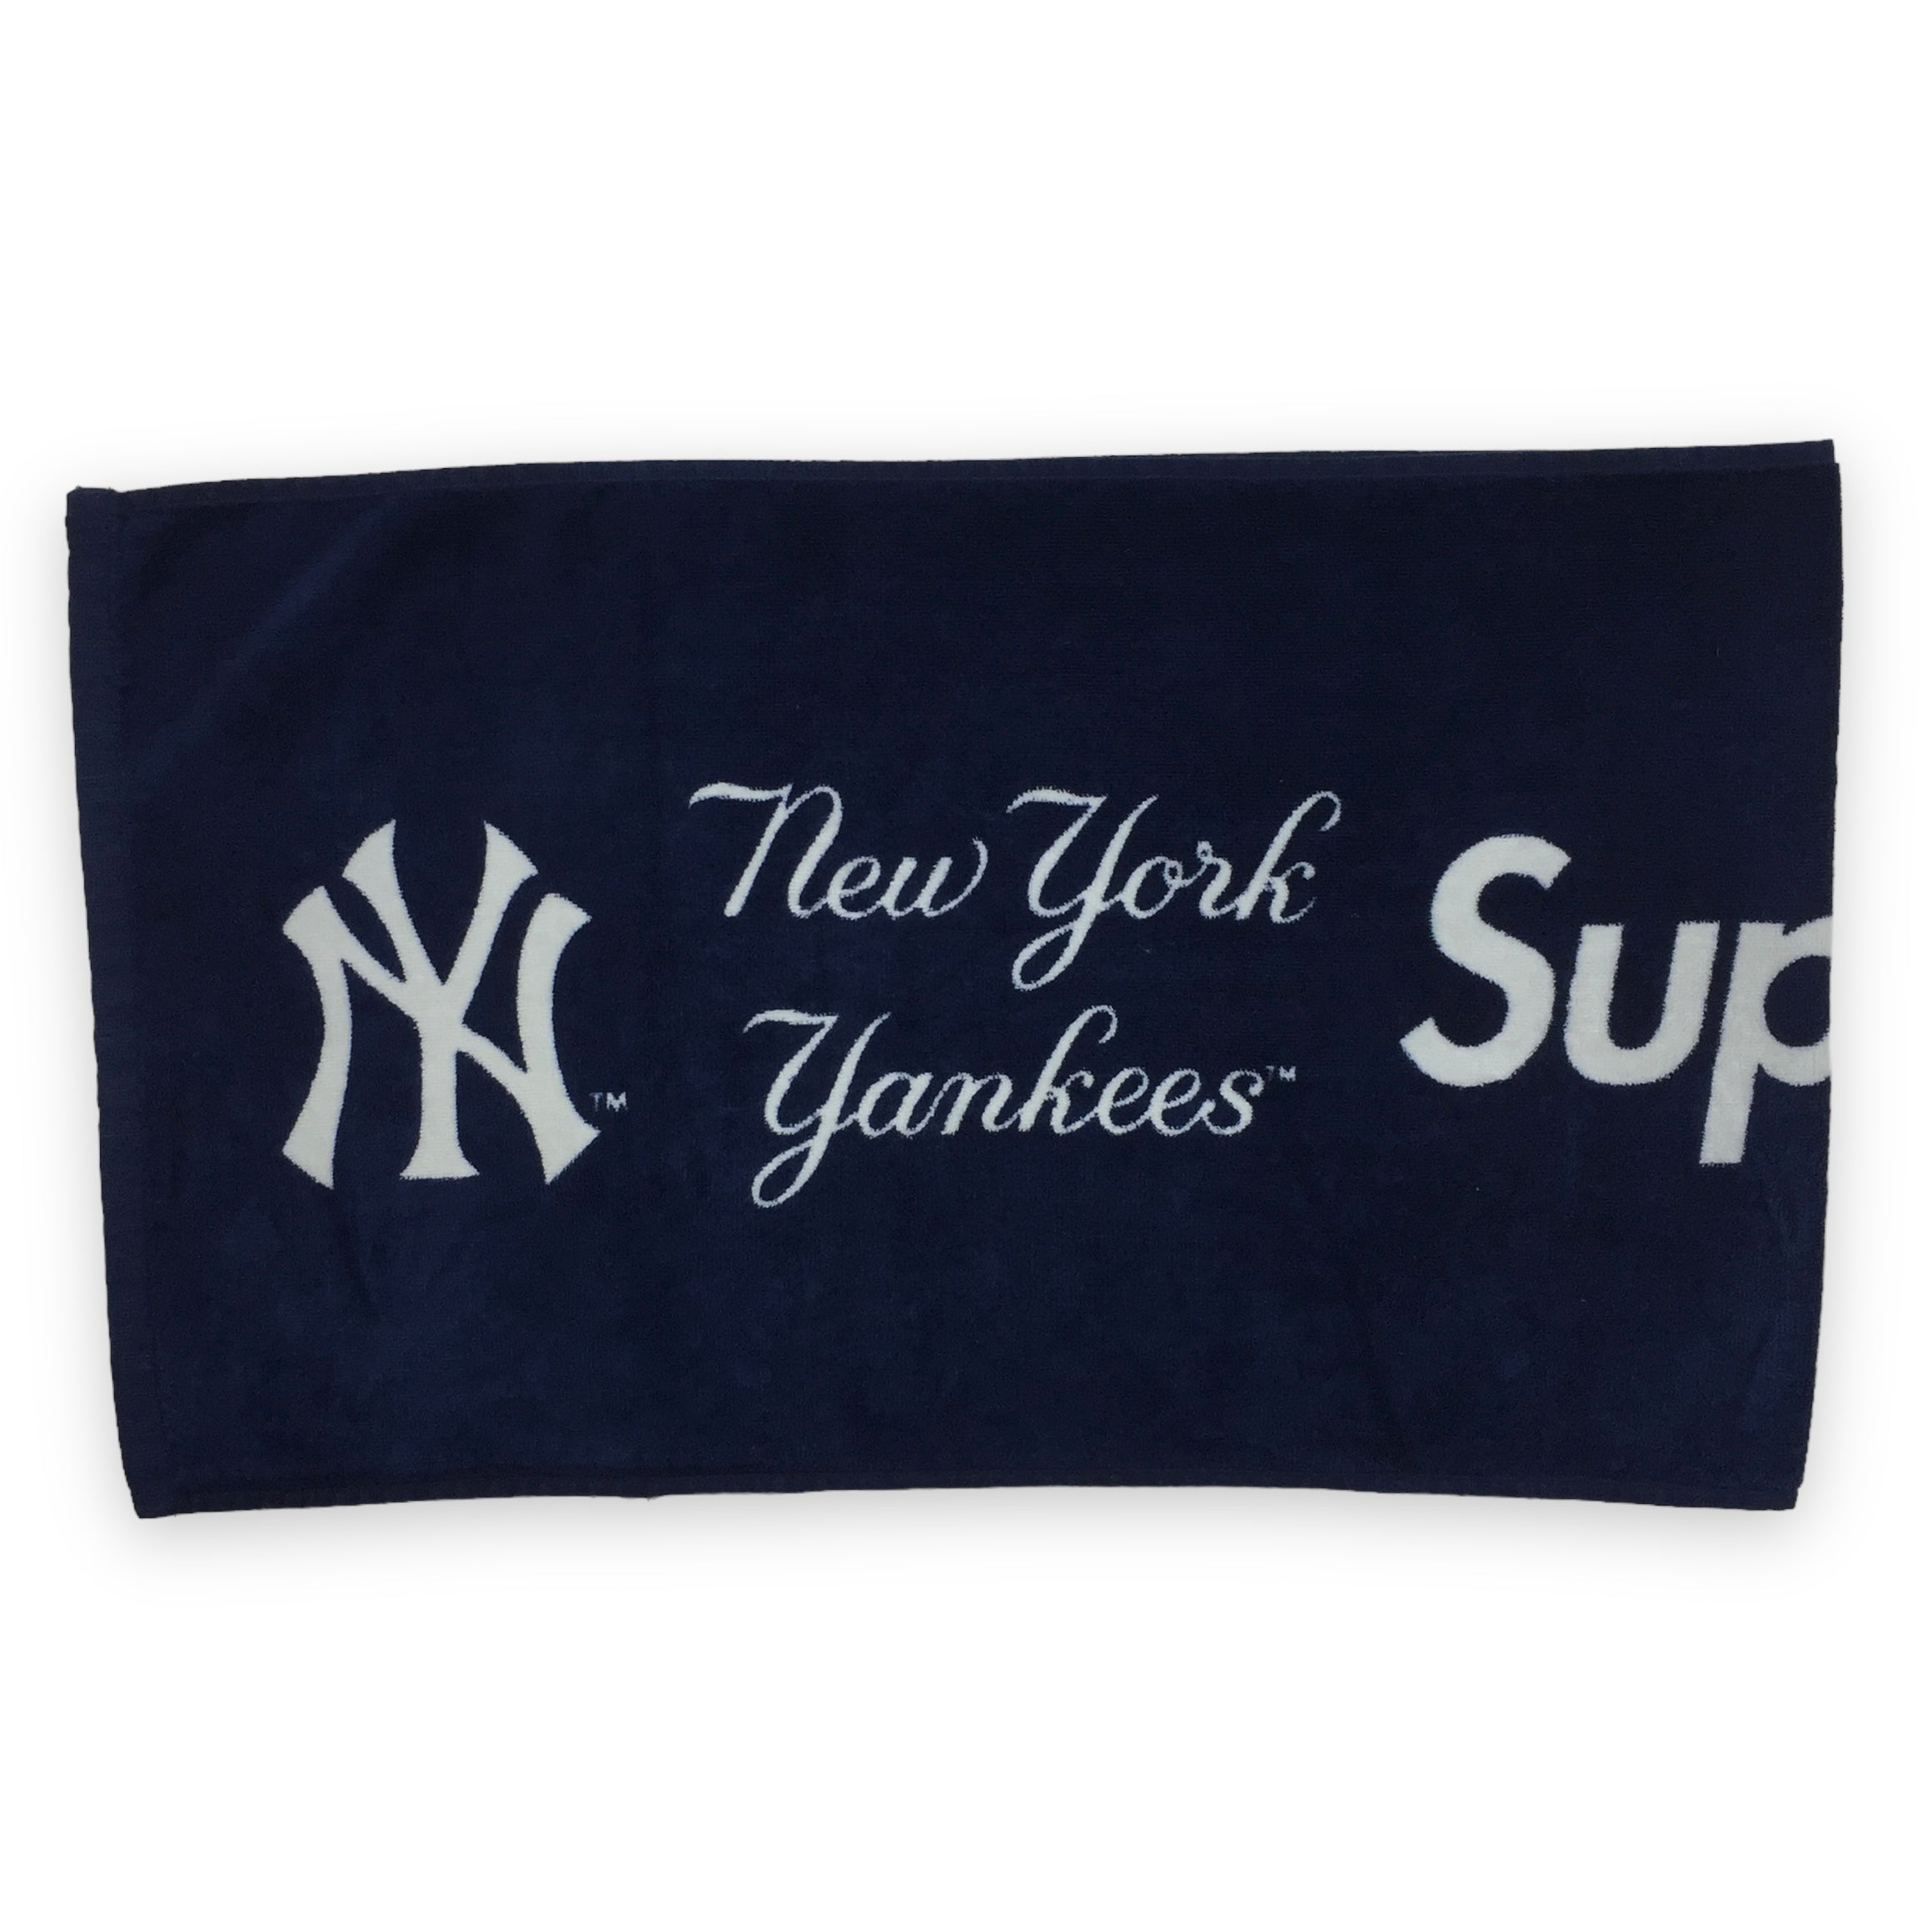 2015 Supreme Yankees Navy Towel